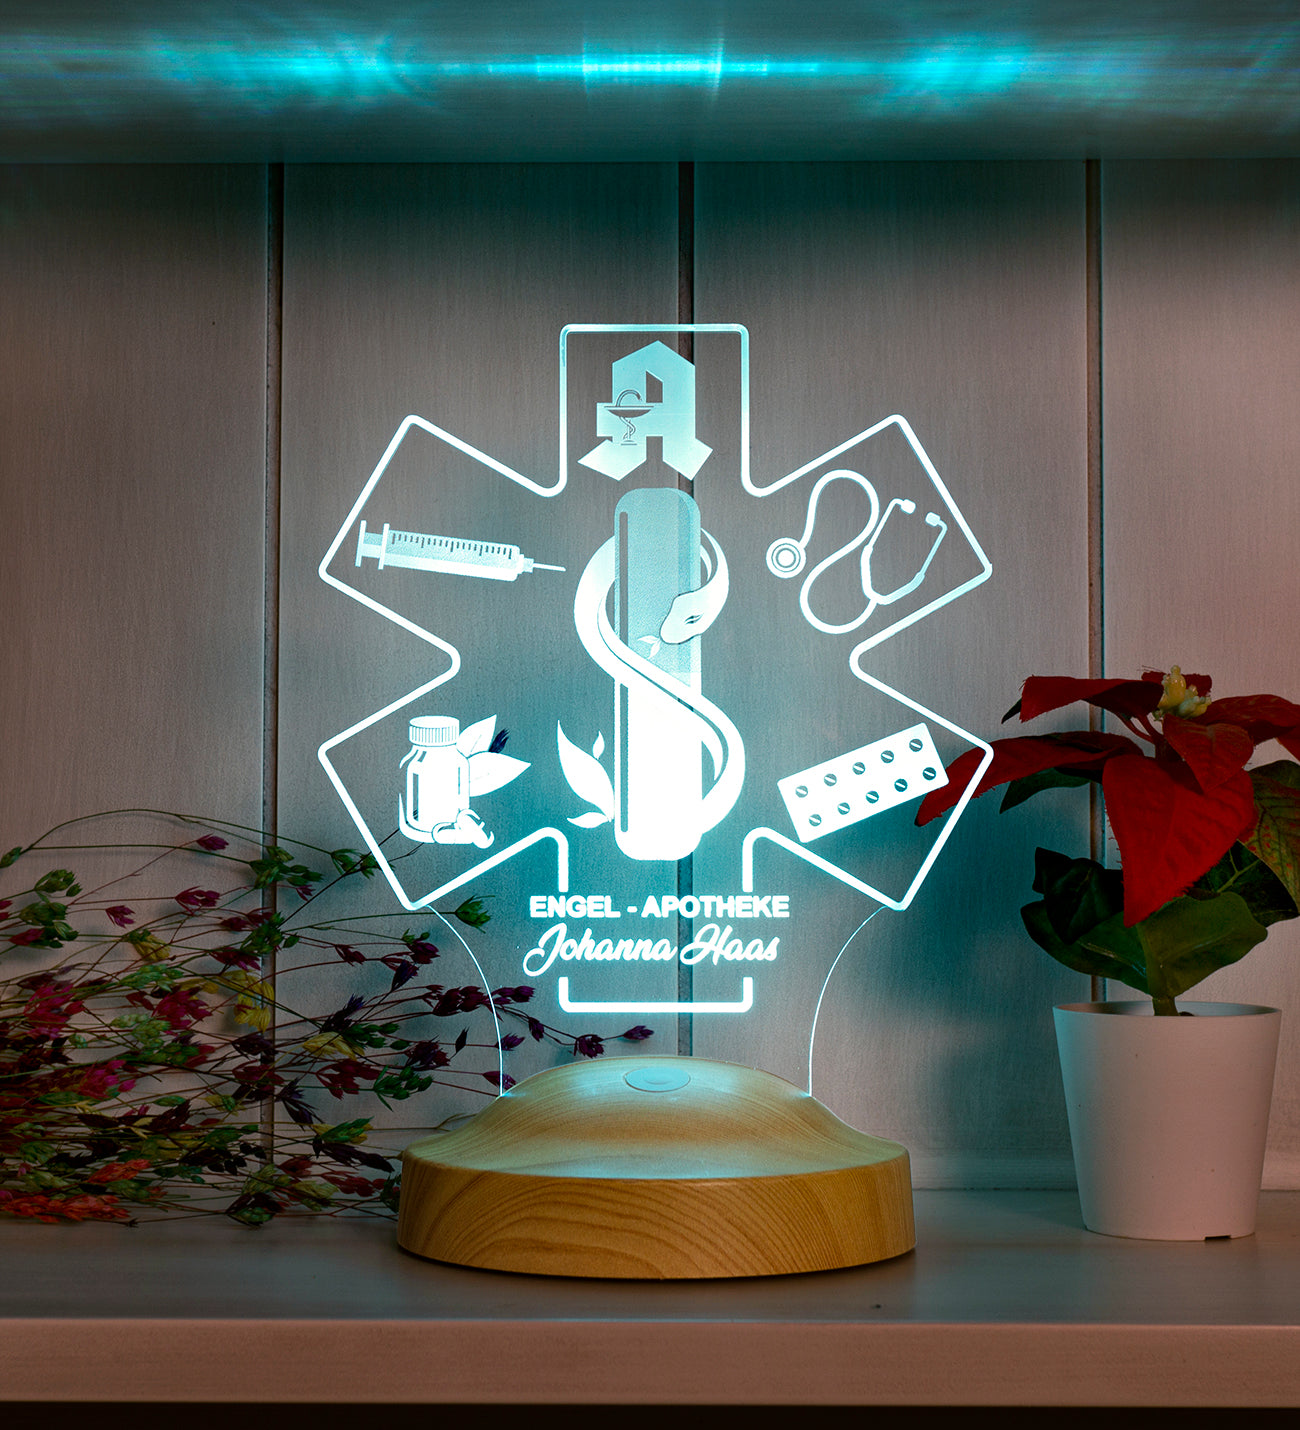 Apotheker Apothekerin Personalisierte Geschenke 3D Led Lampe mit Gravur